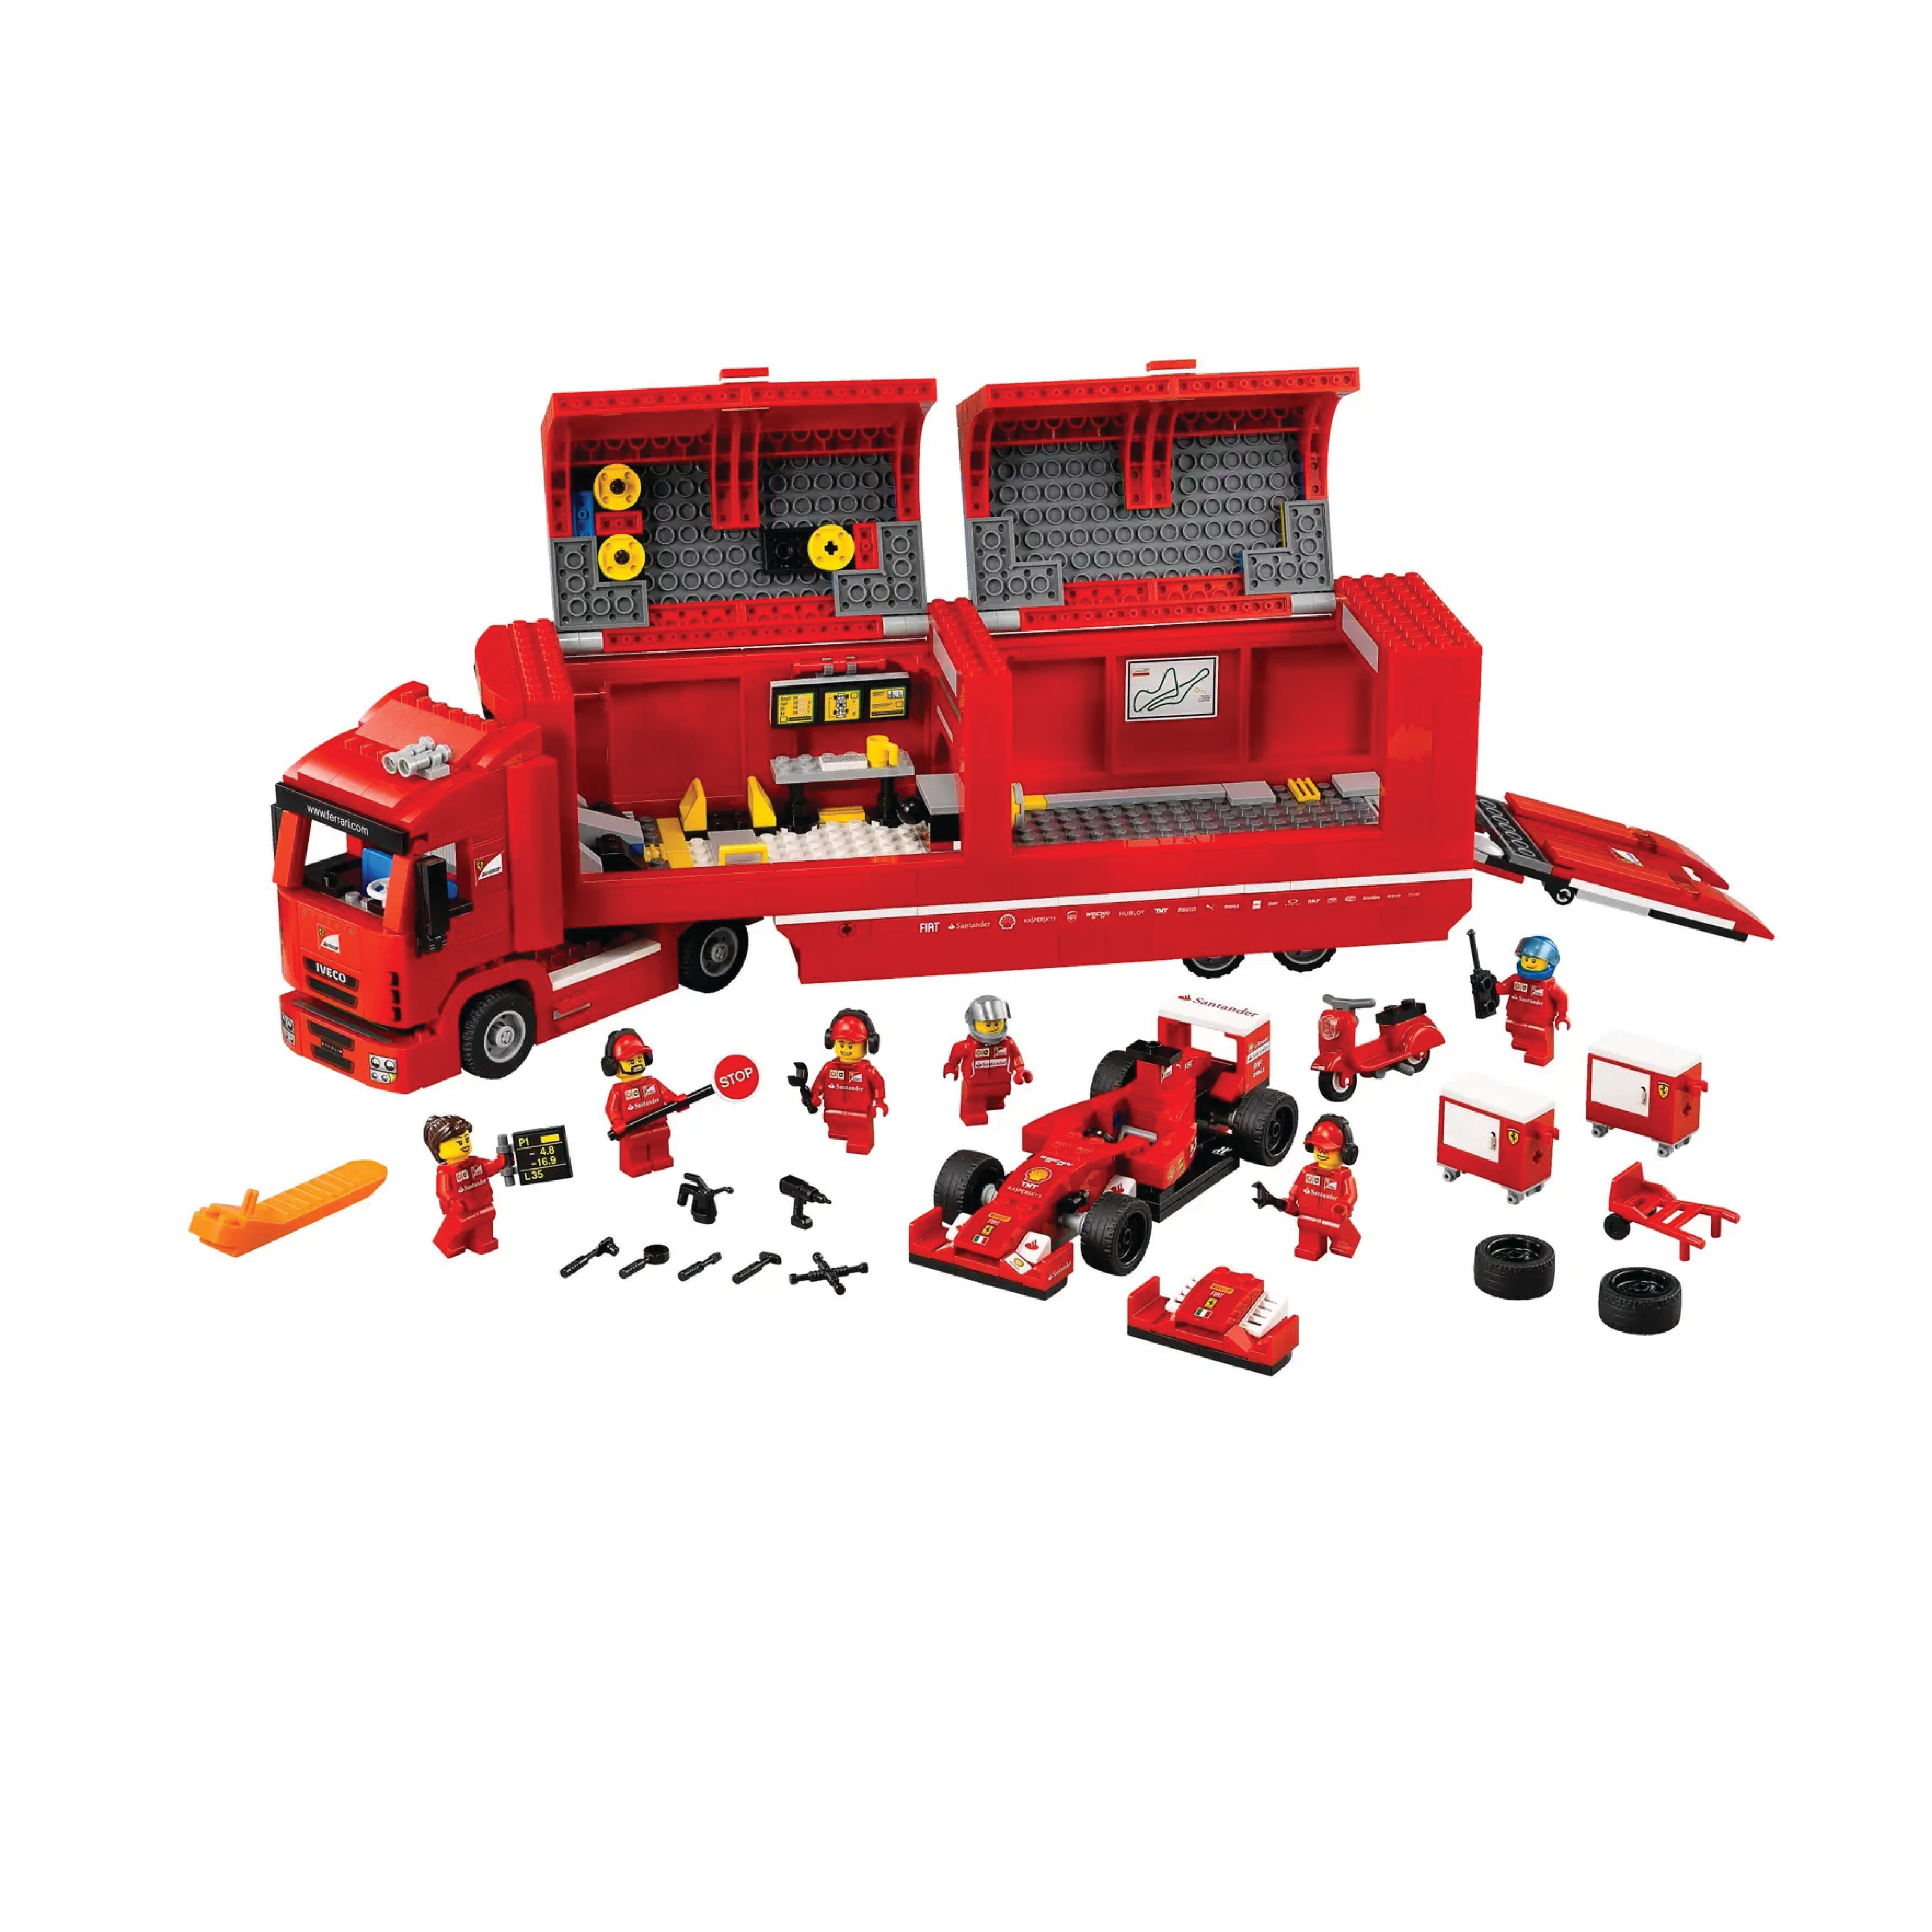 Lego F14 T & Scuderia Ferrari Truck